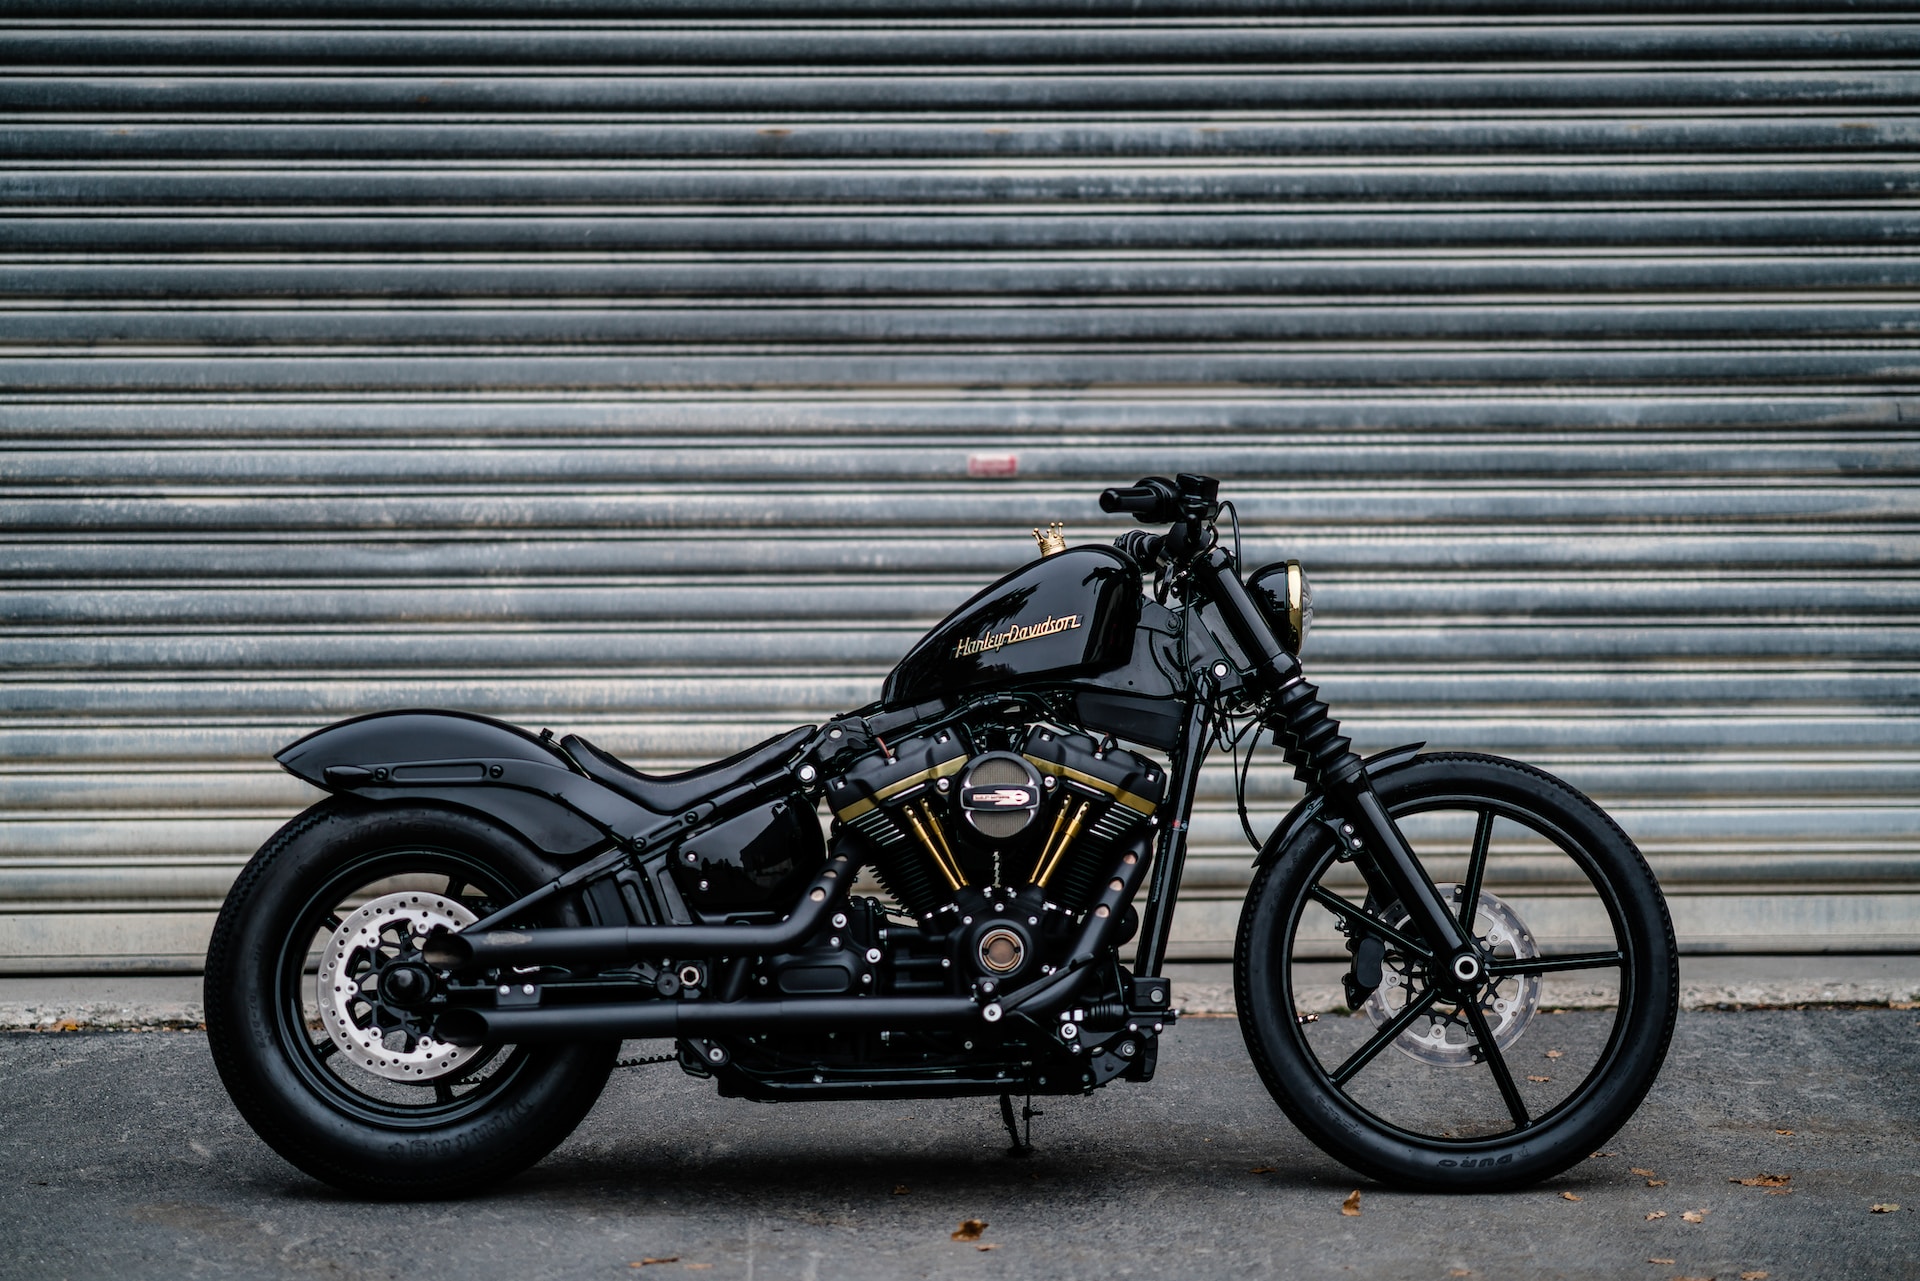 Harley Davidson Motorcycle in front of a workshop door